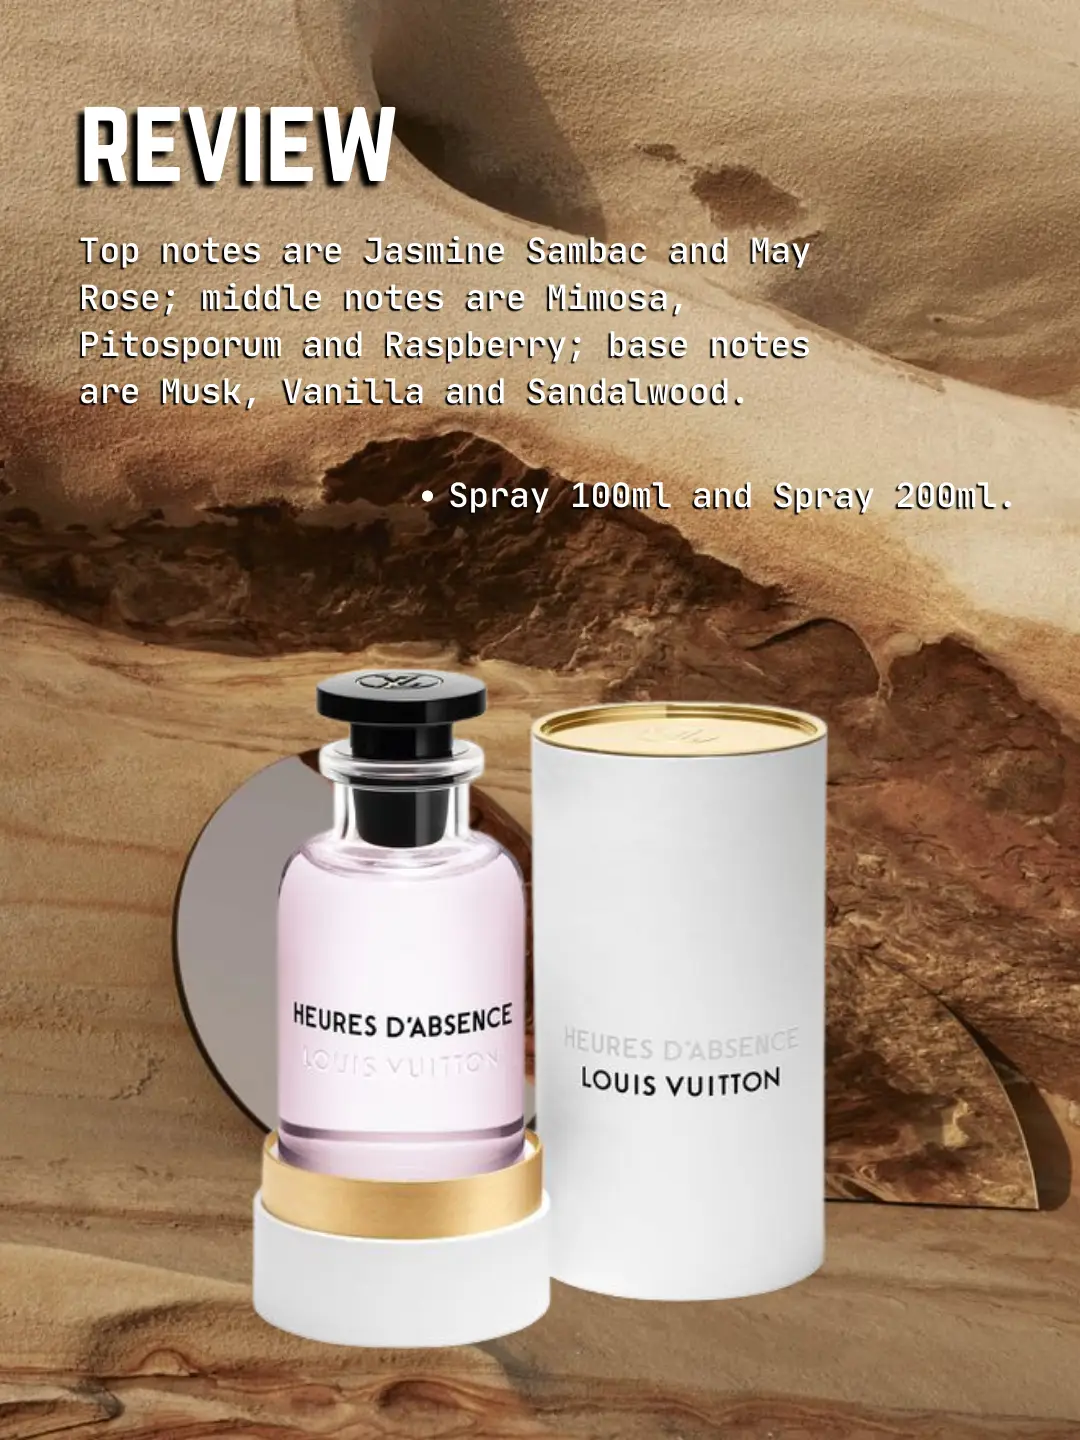 Lv perfume recommendation, Galeri disiarkan oleh adshaysmn